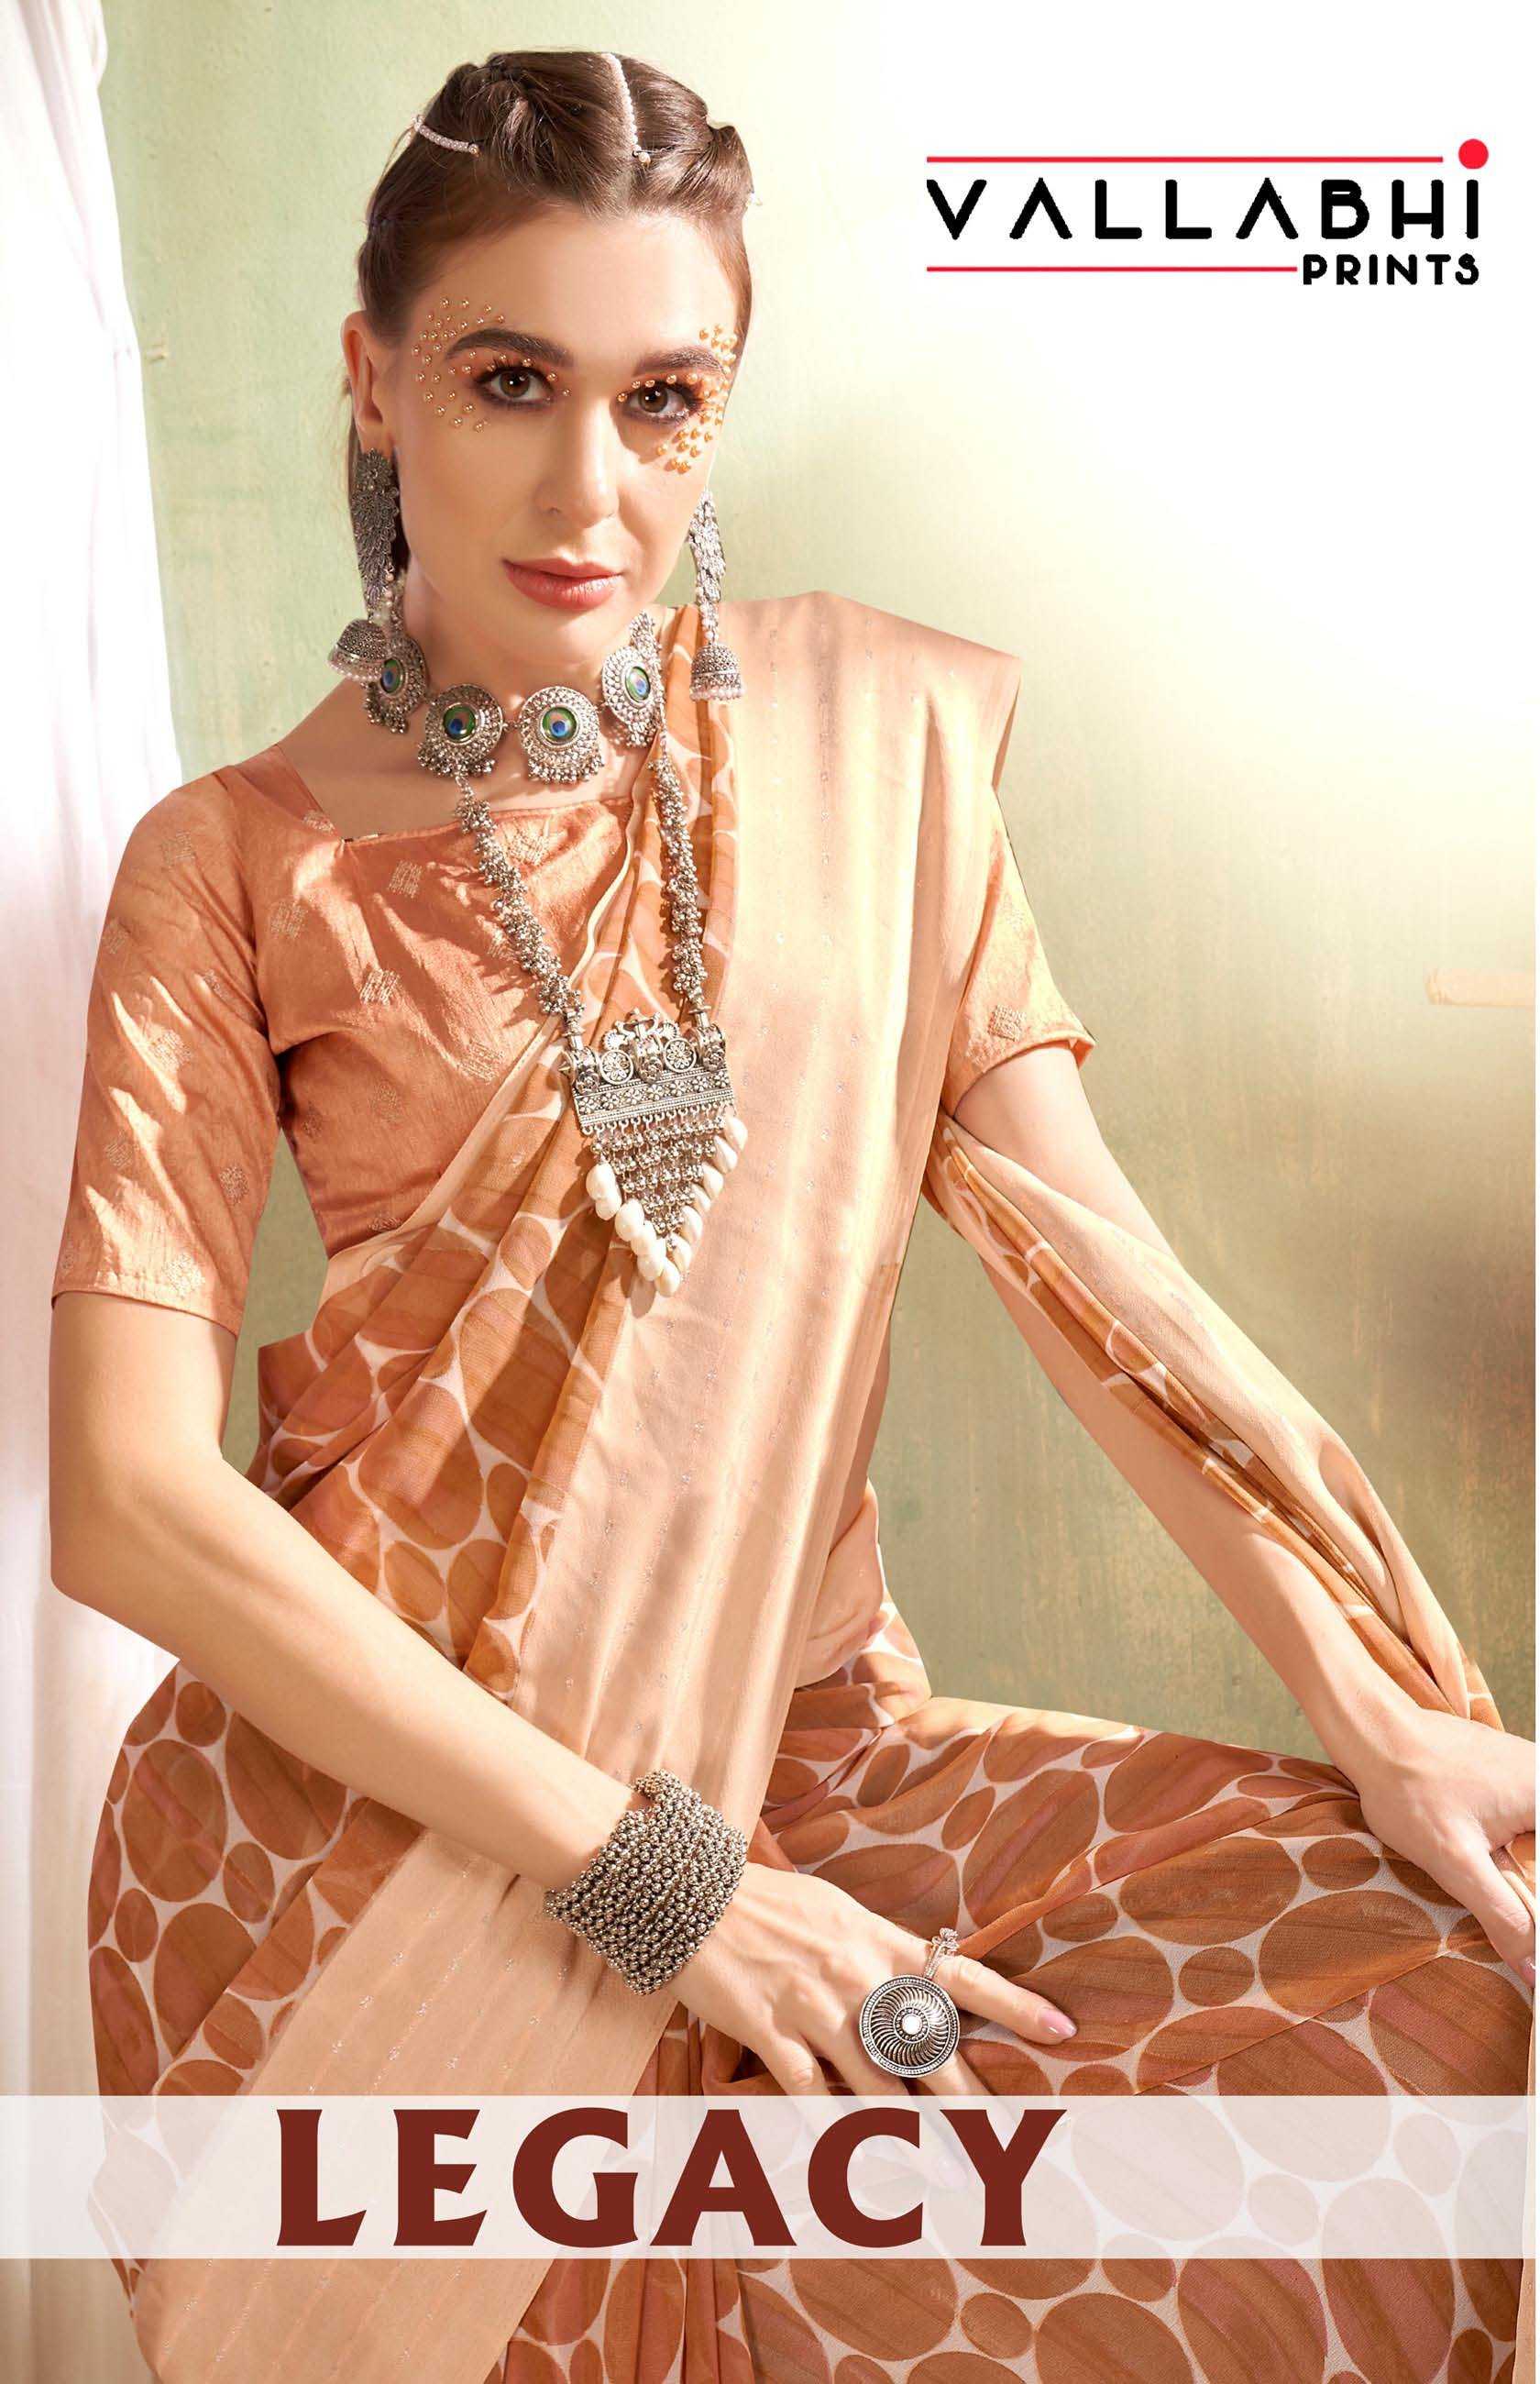 vallabhi prints presents legacy 23131-23136 series function stylish georgette saree